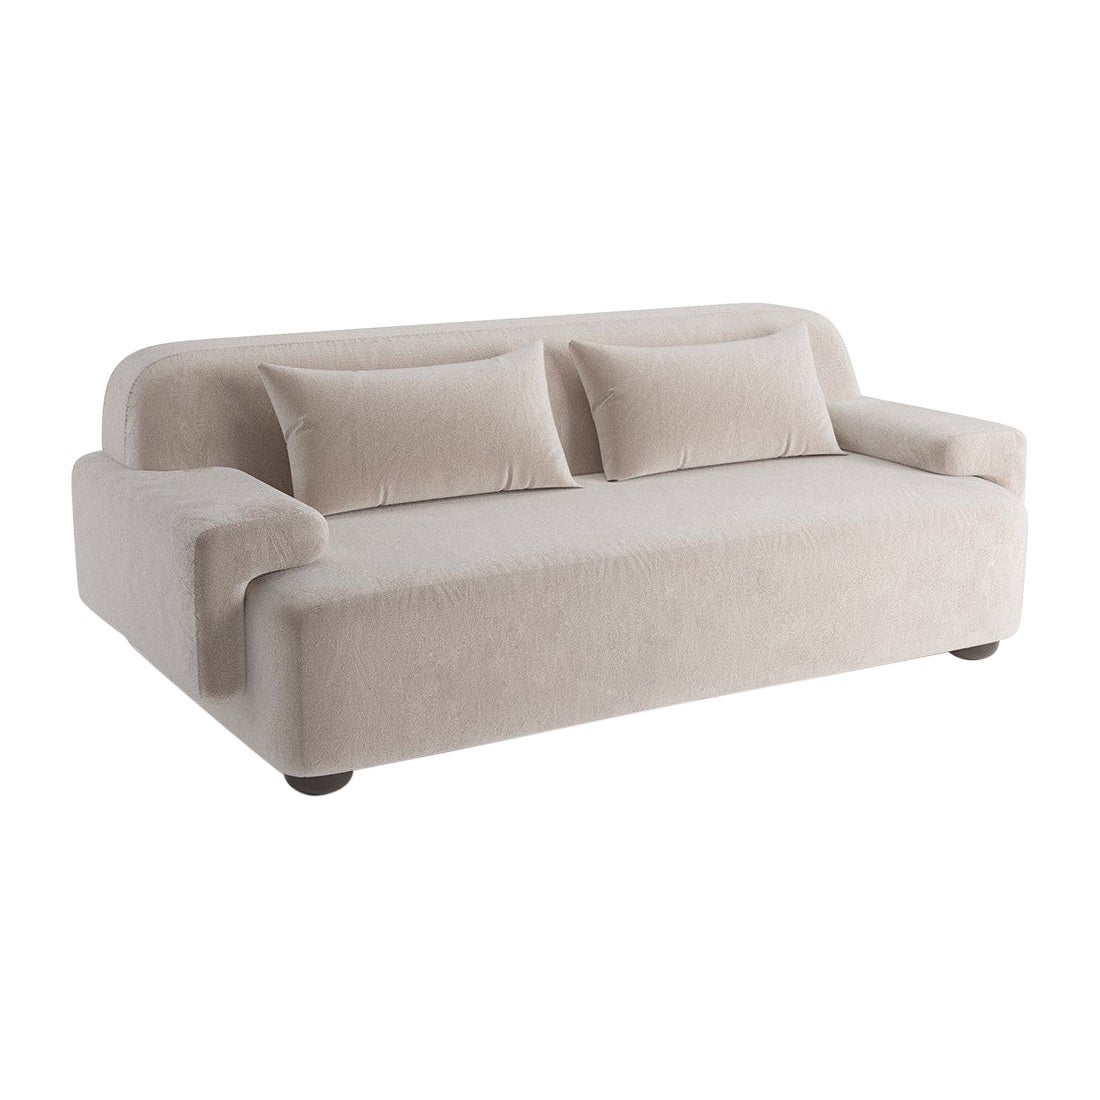 Popus Editions Lena 3-Seater Sofa in Beige Verone Velvet Upholstery